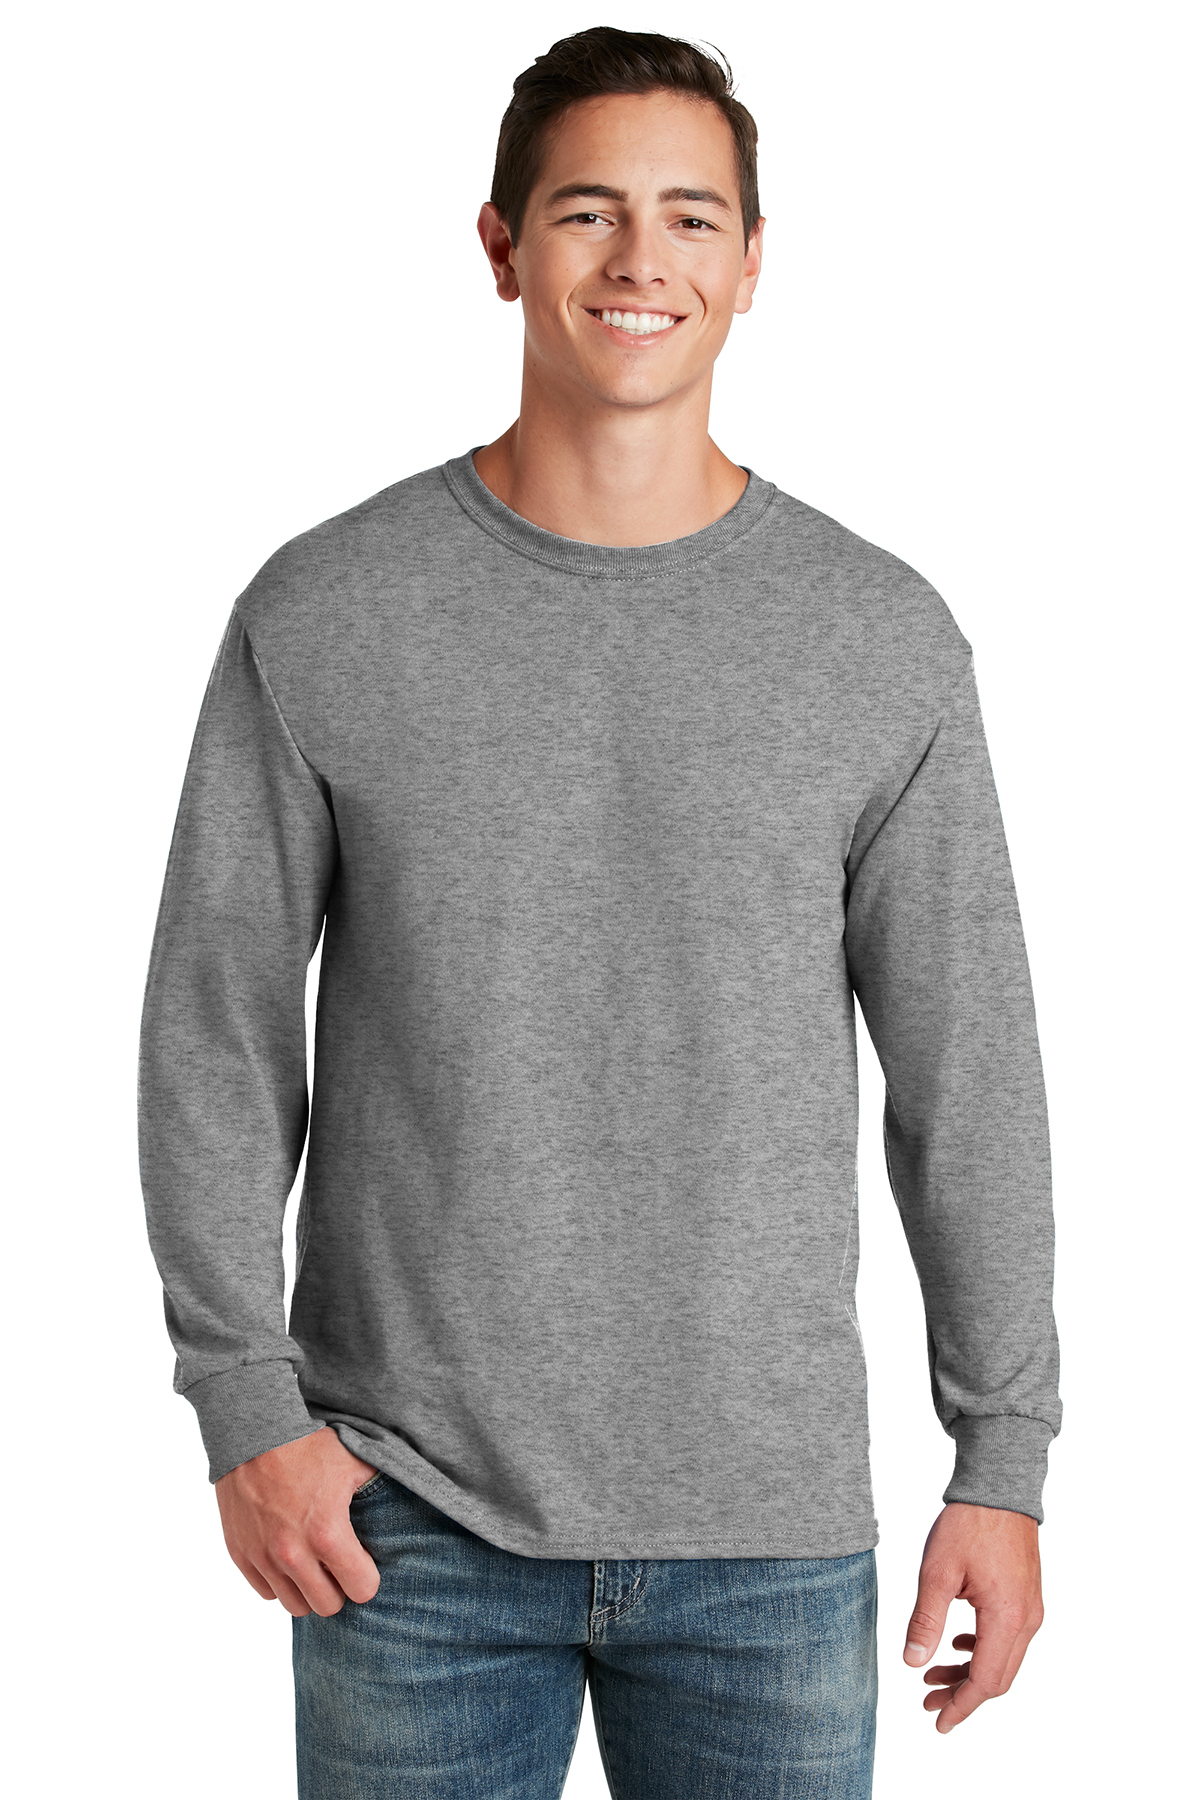 Heavyweight Blend 50/50 Cotton/Poly Adult Long-Sleeve T-Shirt Jerzees Adult 5.6 oz